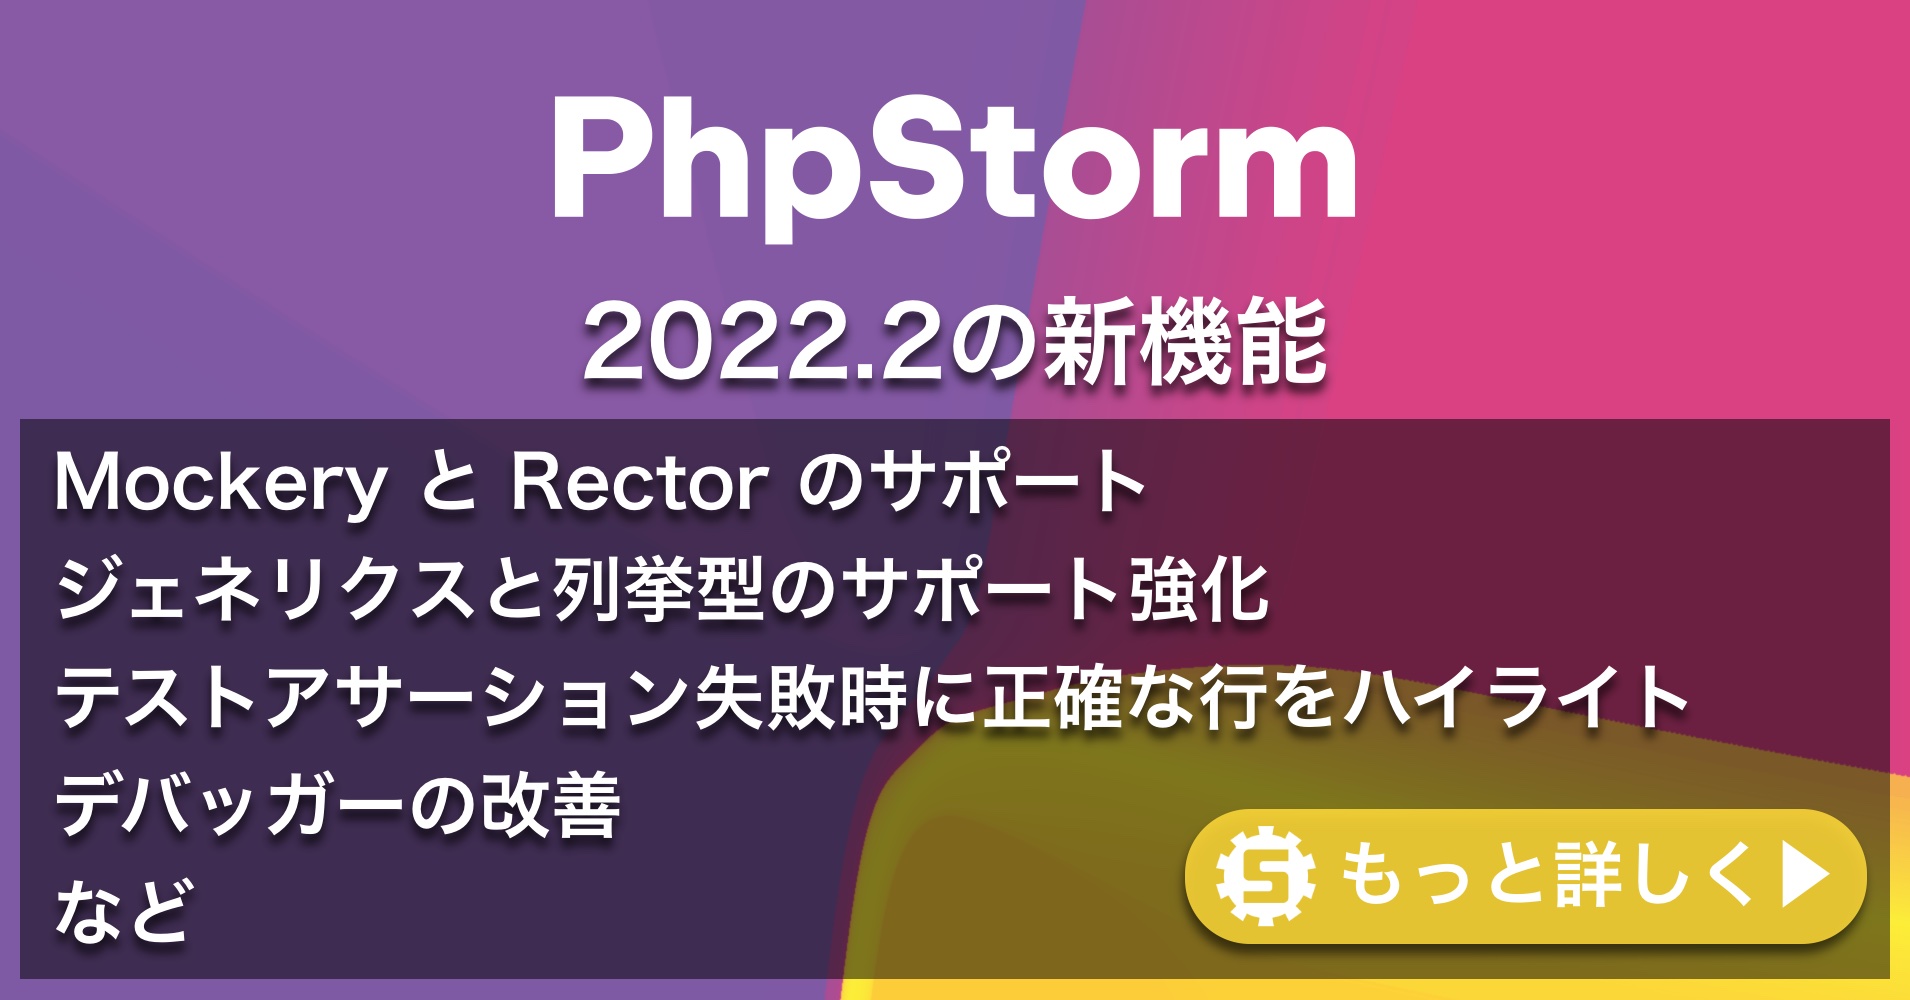 PhpStorm 2022.2の新機能